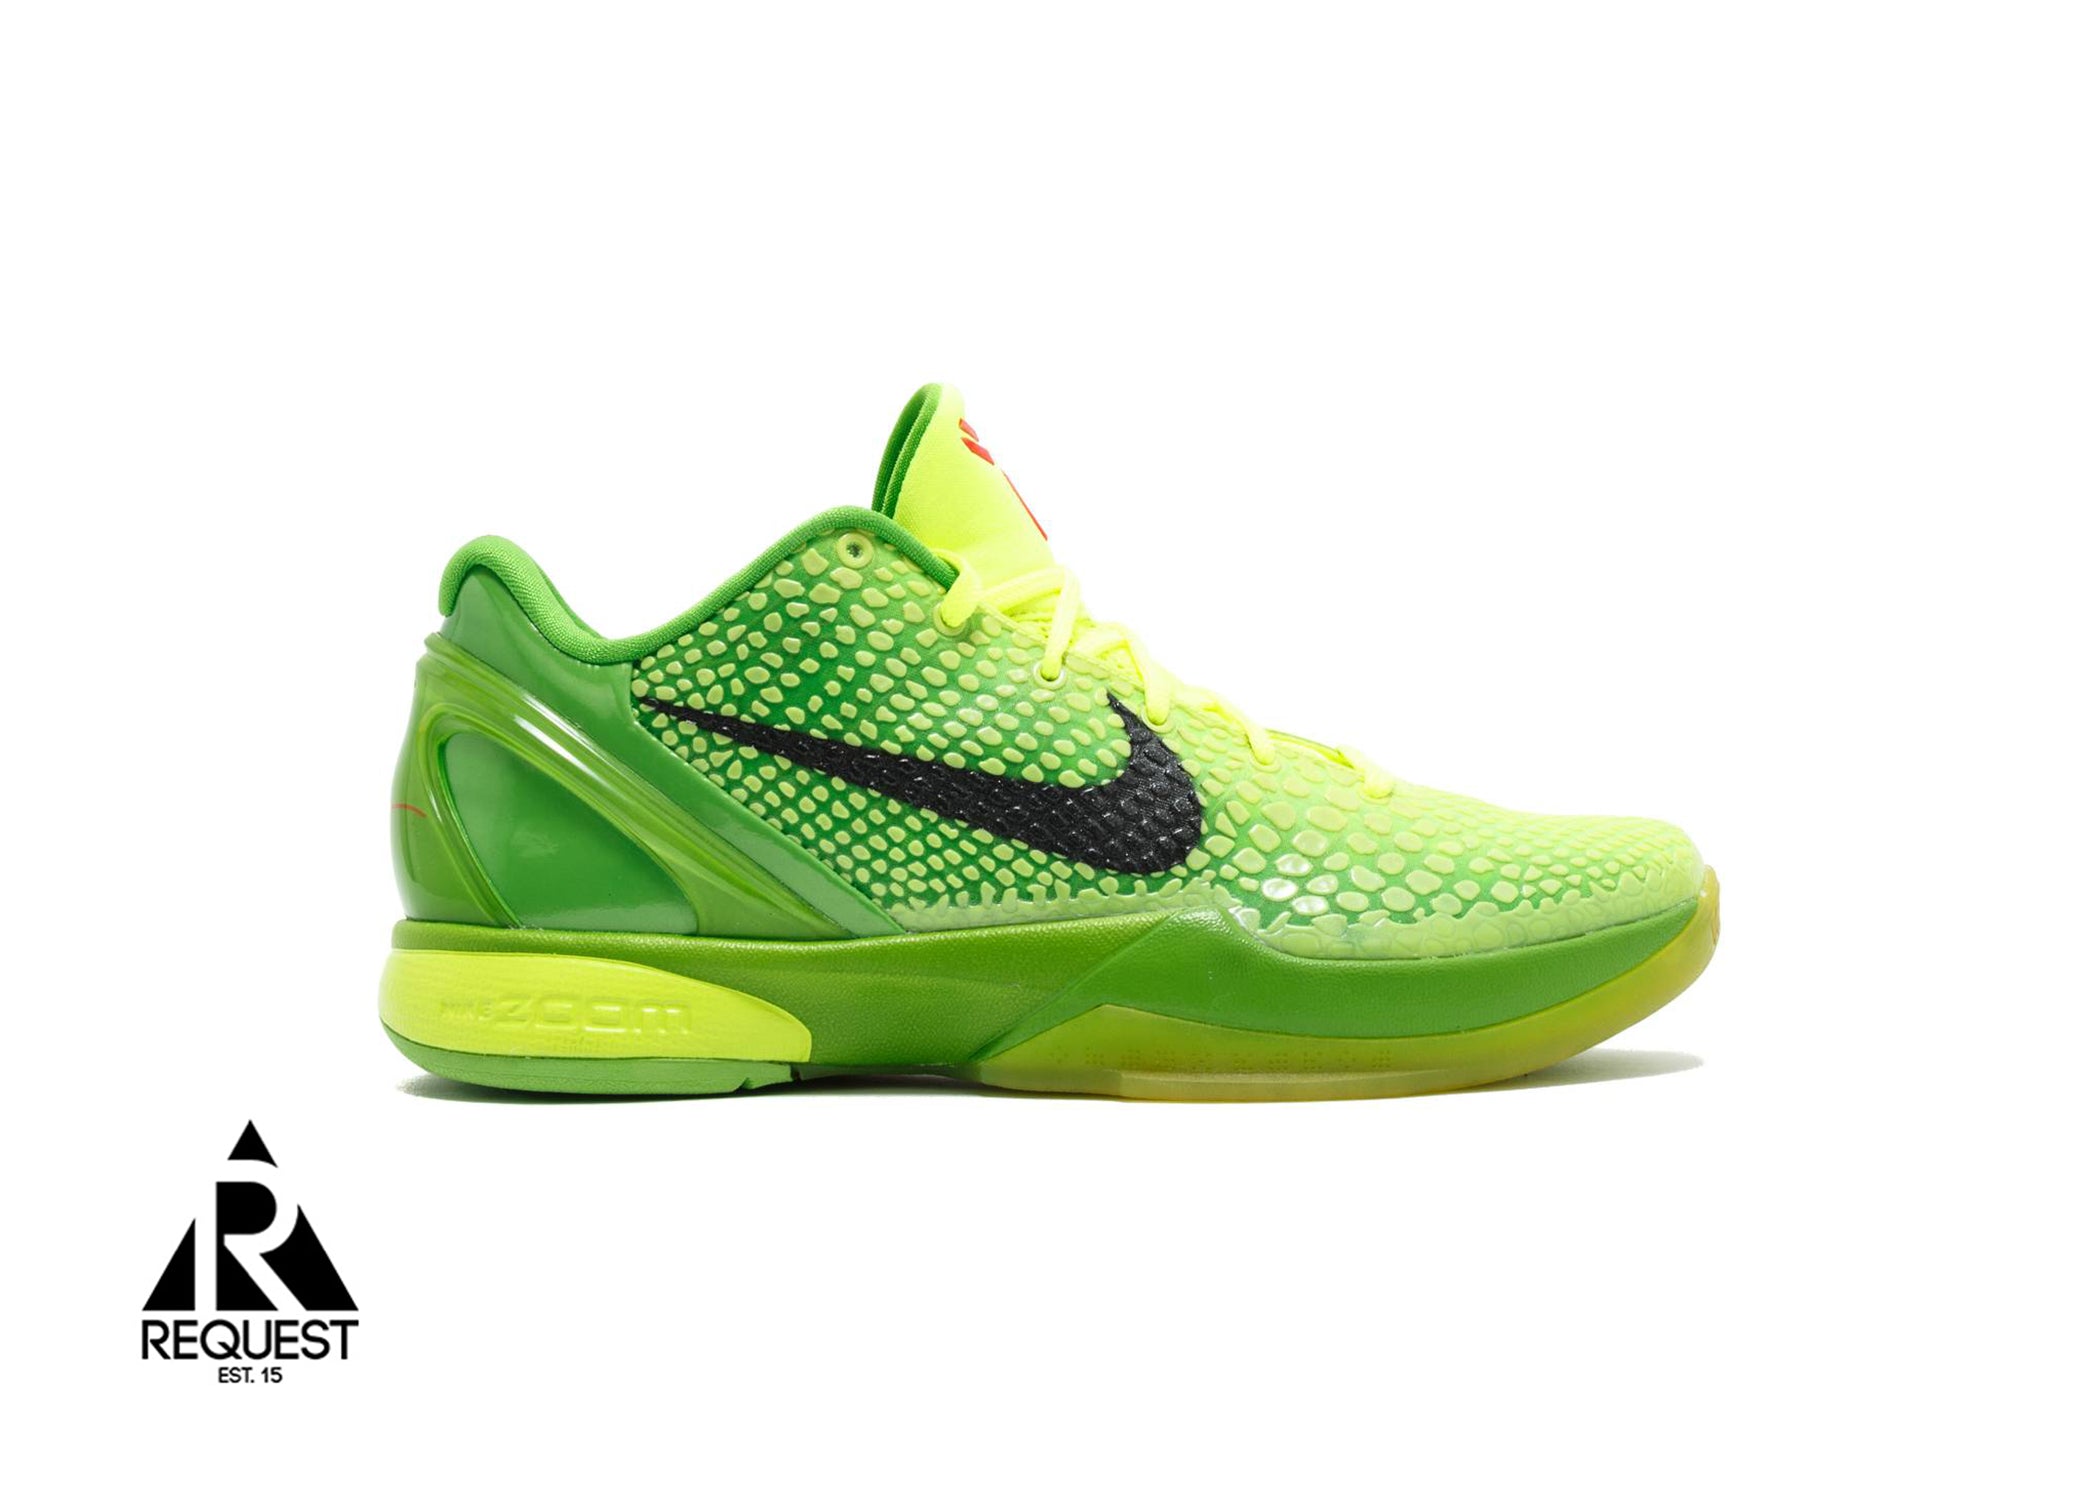 2010 Nike Kobe 6 “Grinch”